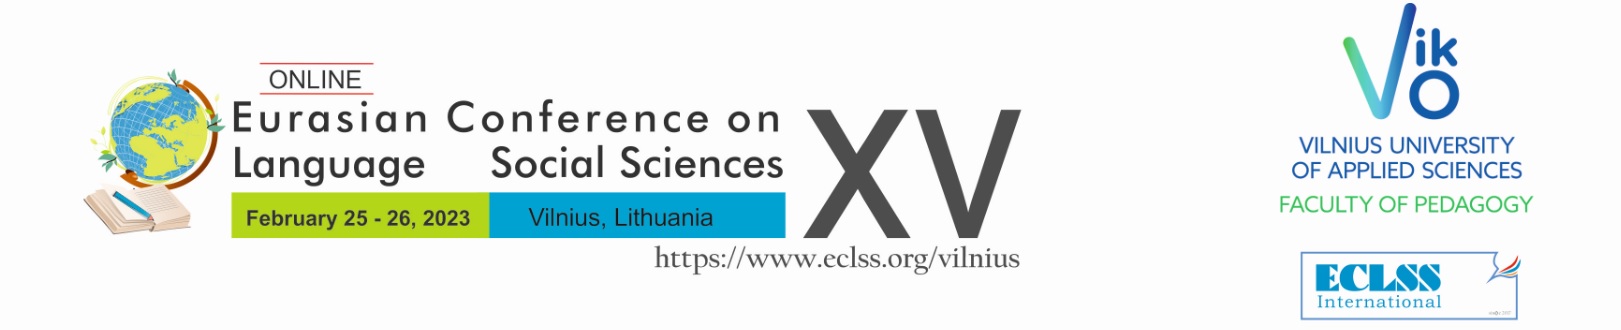 ECLSS International Conference  Logo